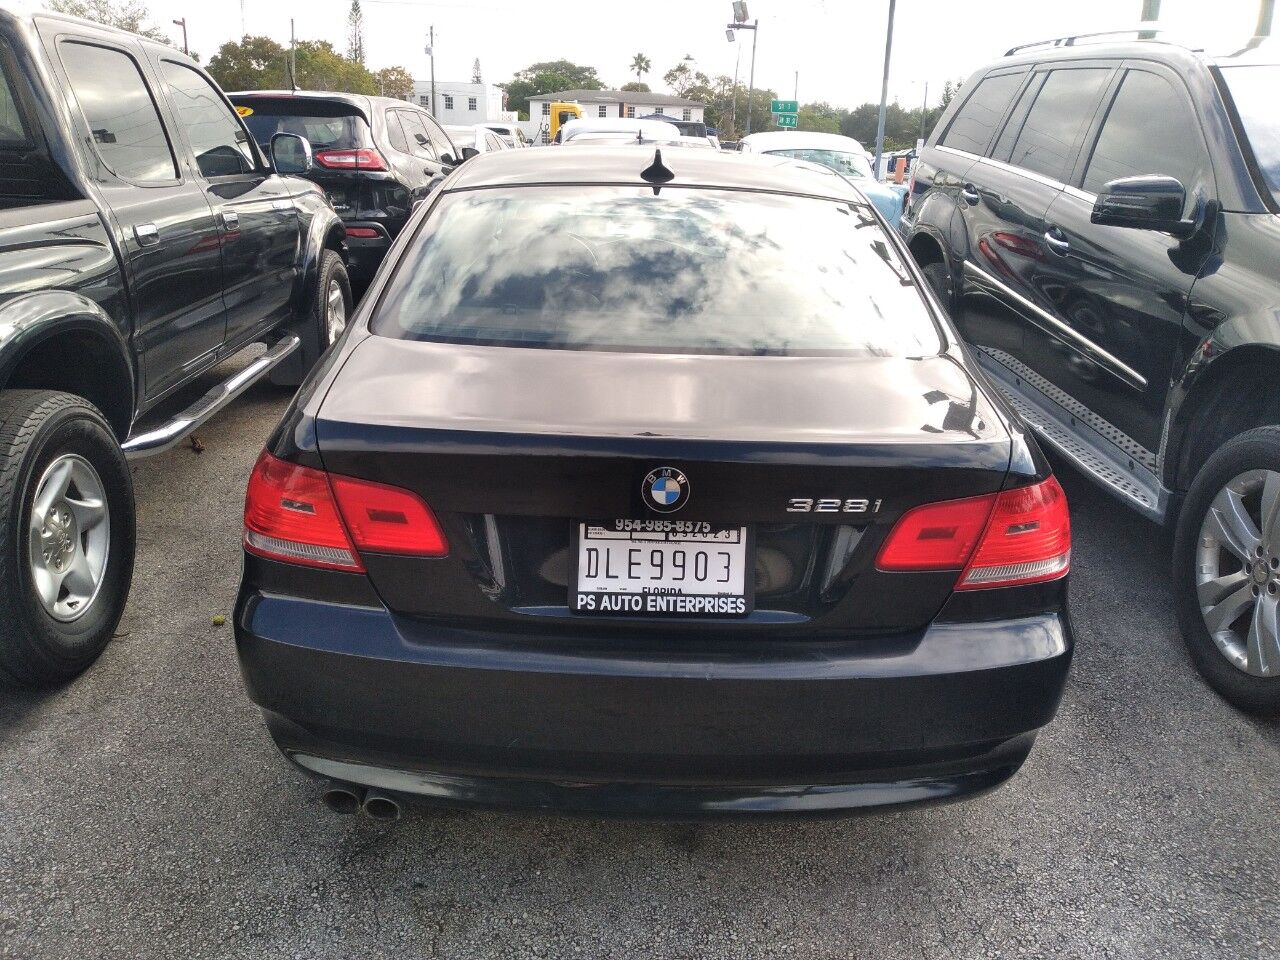 2009 BMW 328i Coupe - $3,999